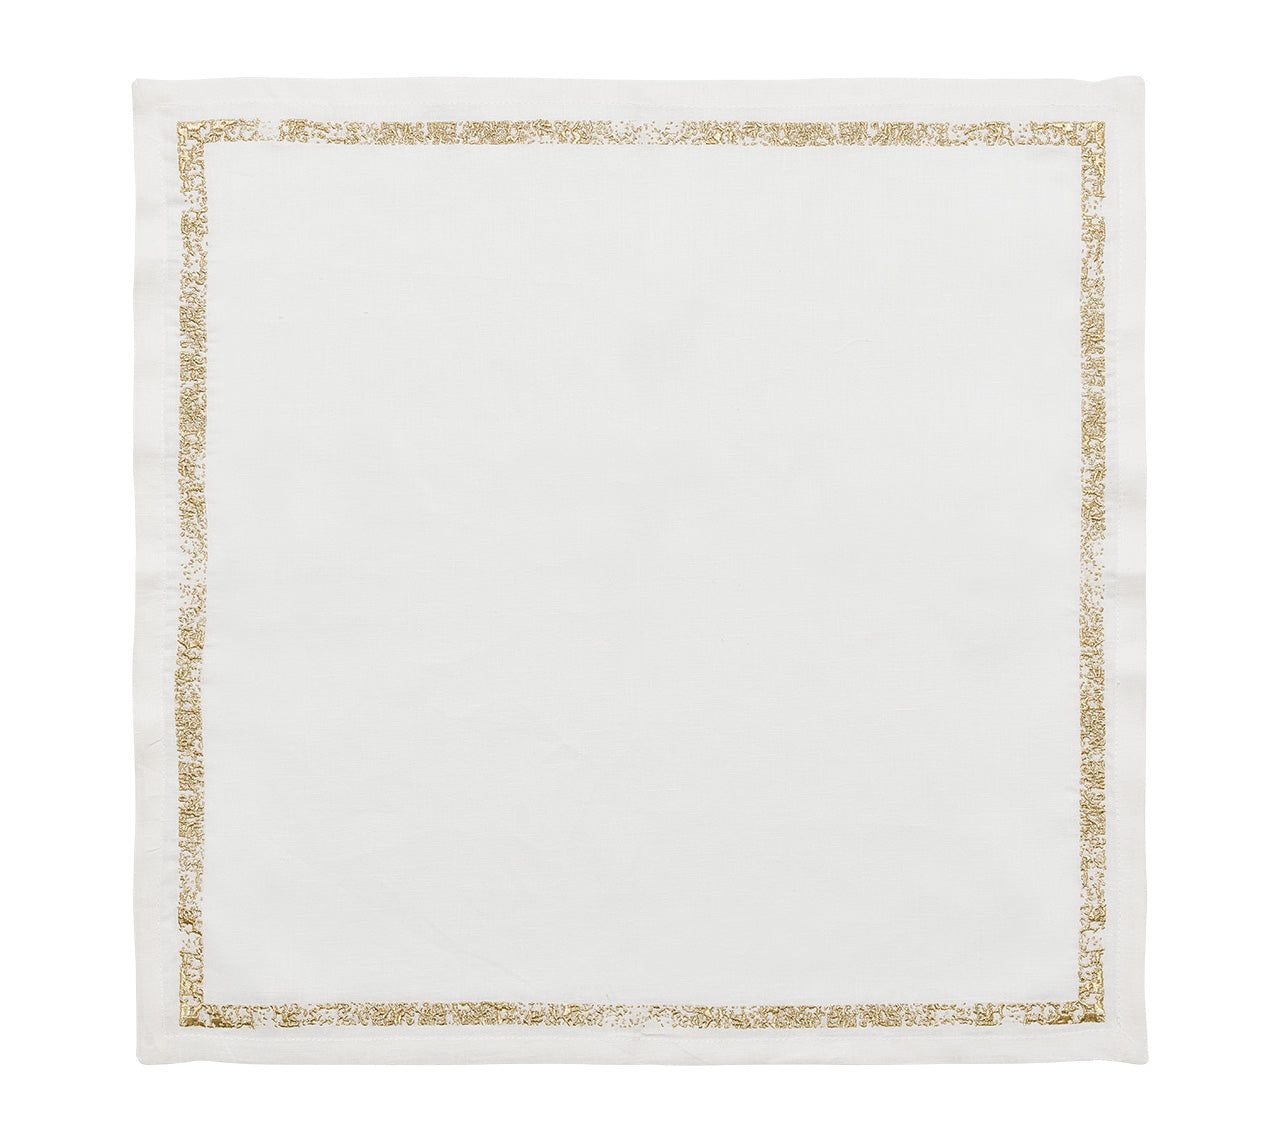 Impression Napkin in White & Gold, Set of 4